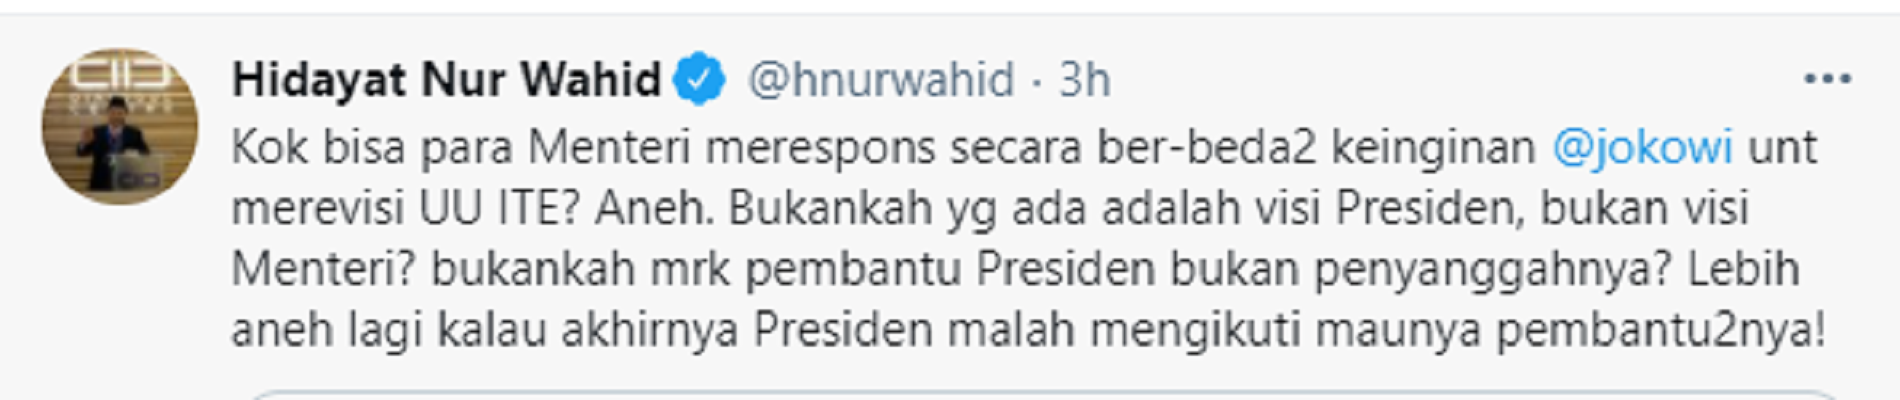 Cuitan Hidayat Nur Wahid soal wacana revisi UU ITE.